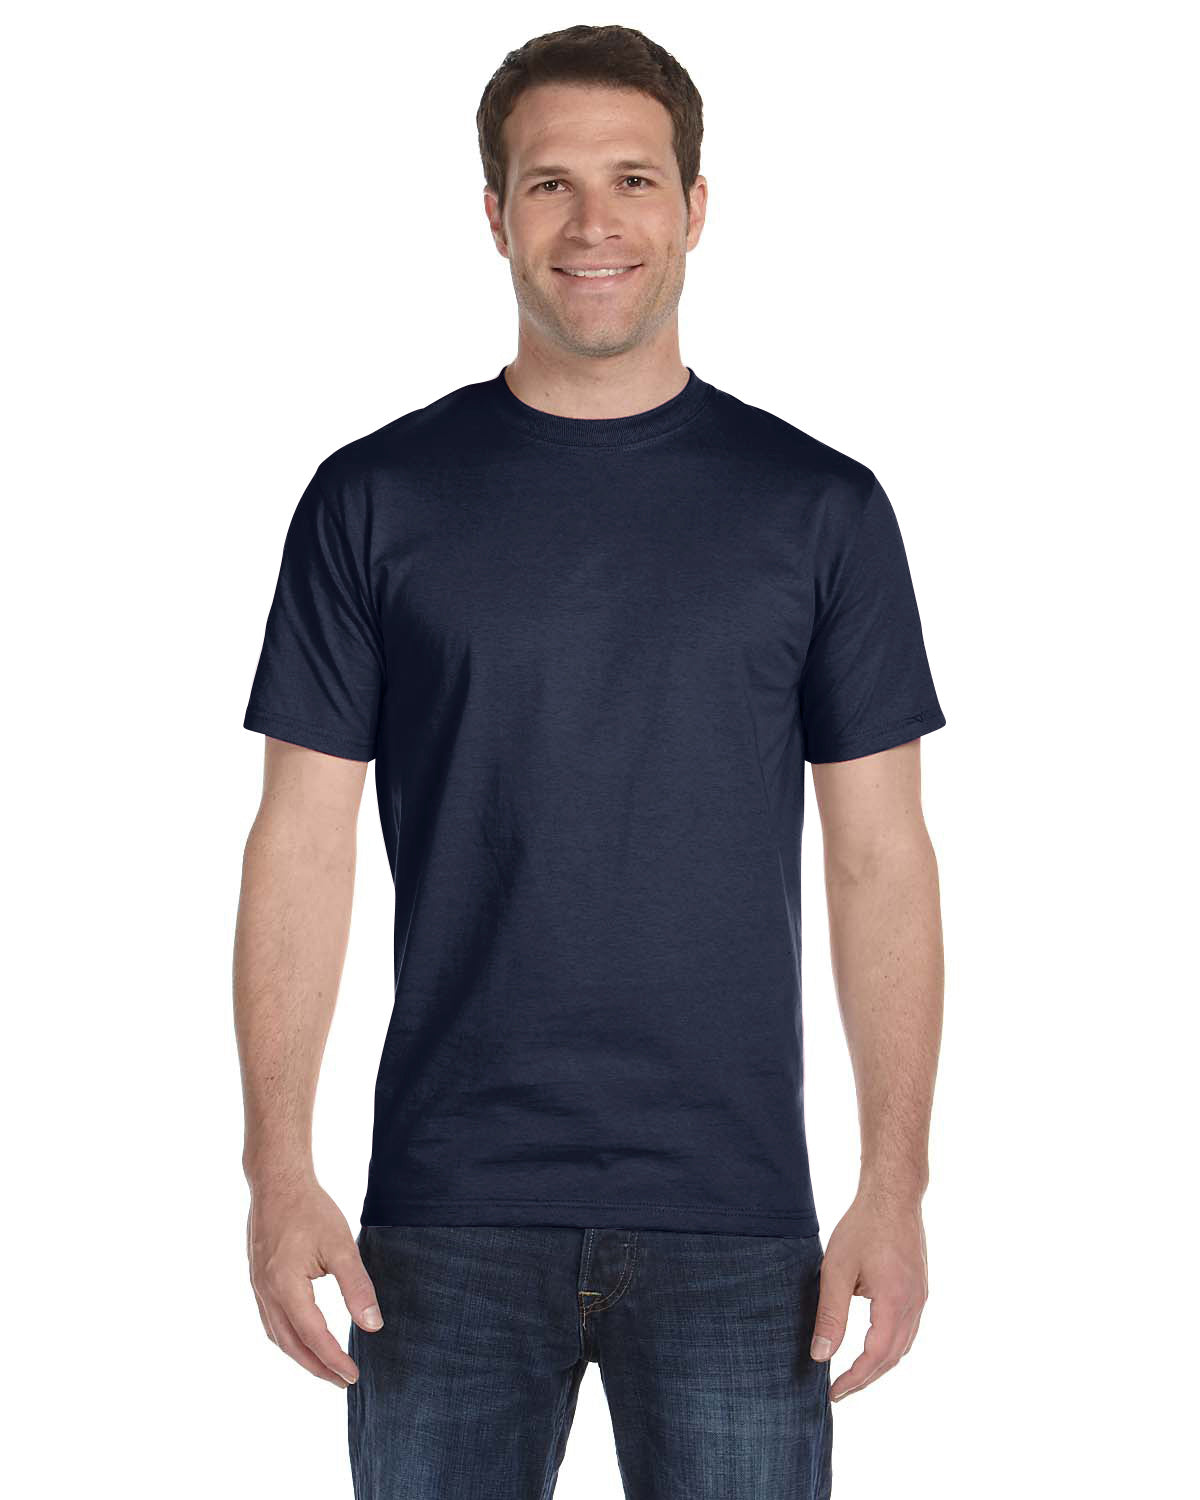 T-Shirt The Adult BASIC – Dryblend HTV Gildan 50/50 Store COLORS